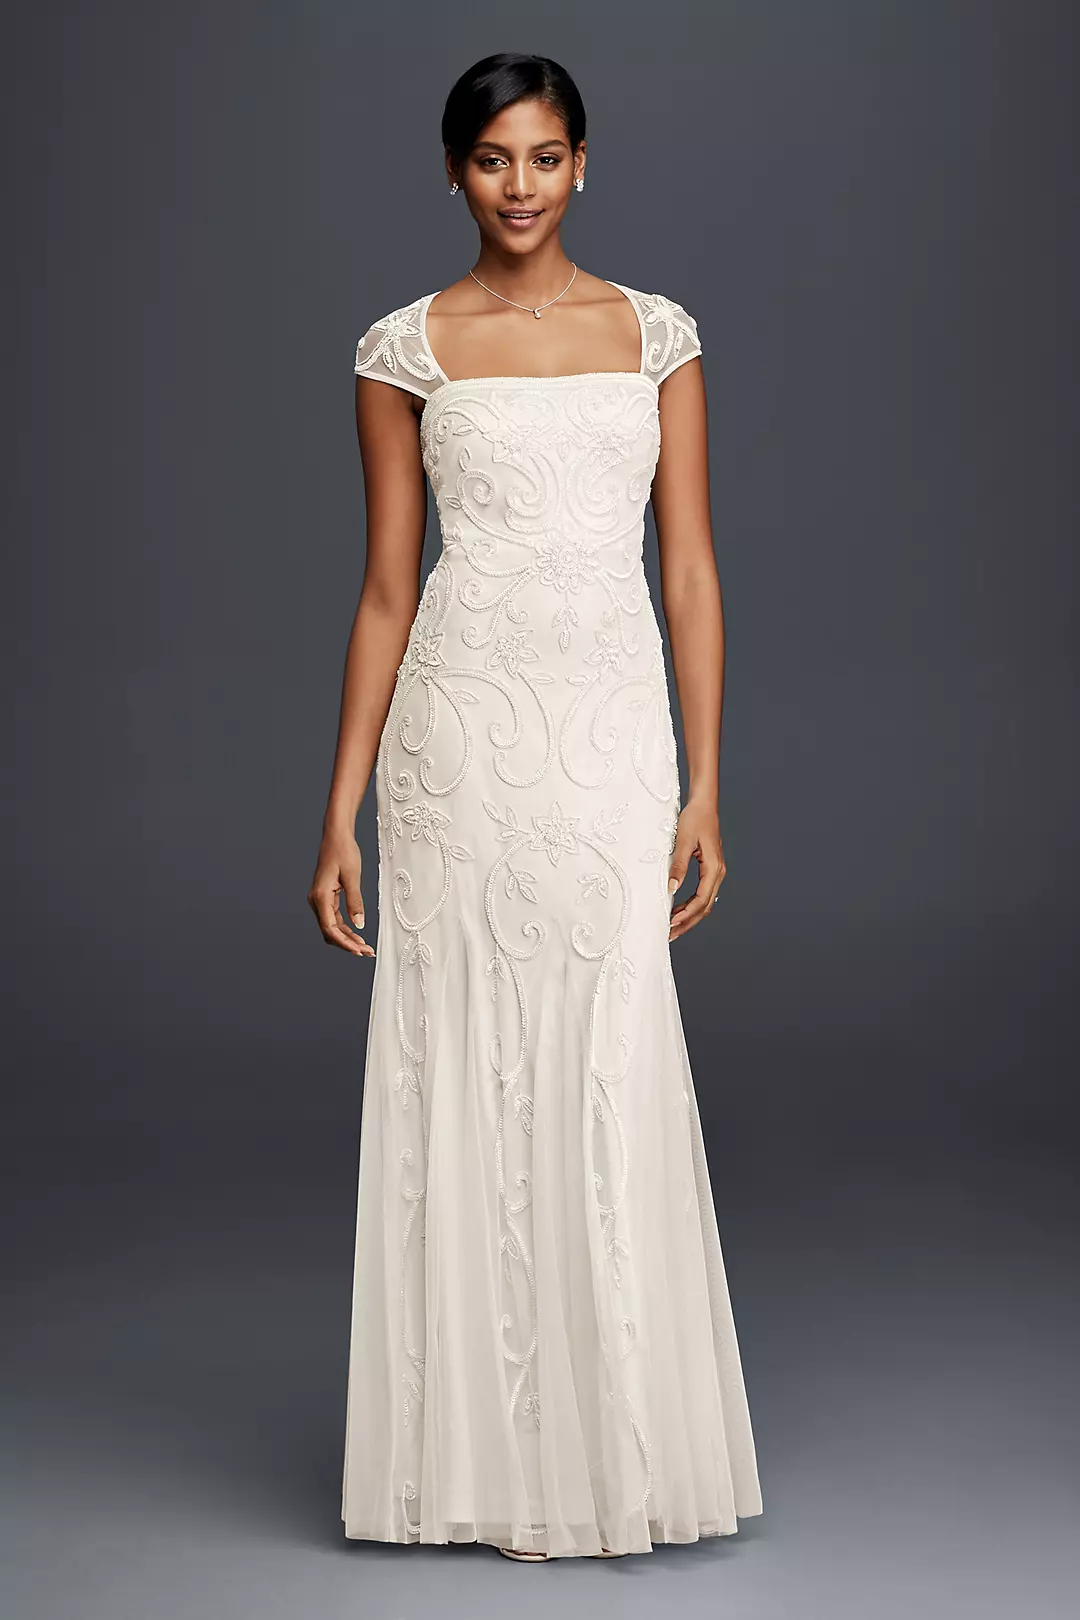 Beaded Sheath Wedding Dress with Cap Sleeves Image